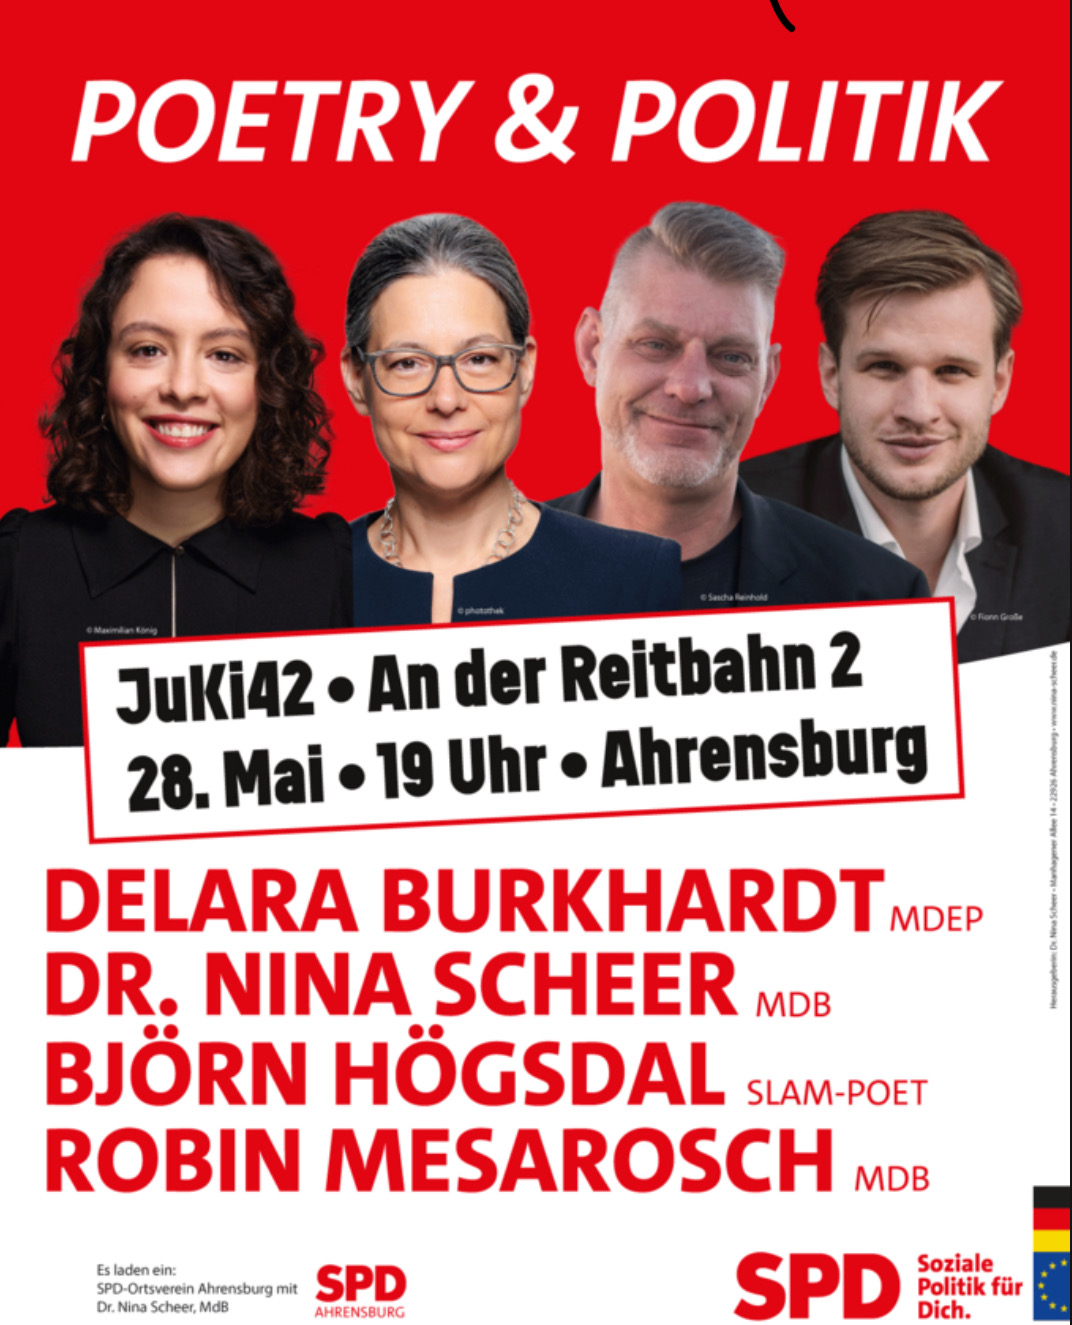 Poetry & Politik am 28.5. im JuKi42